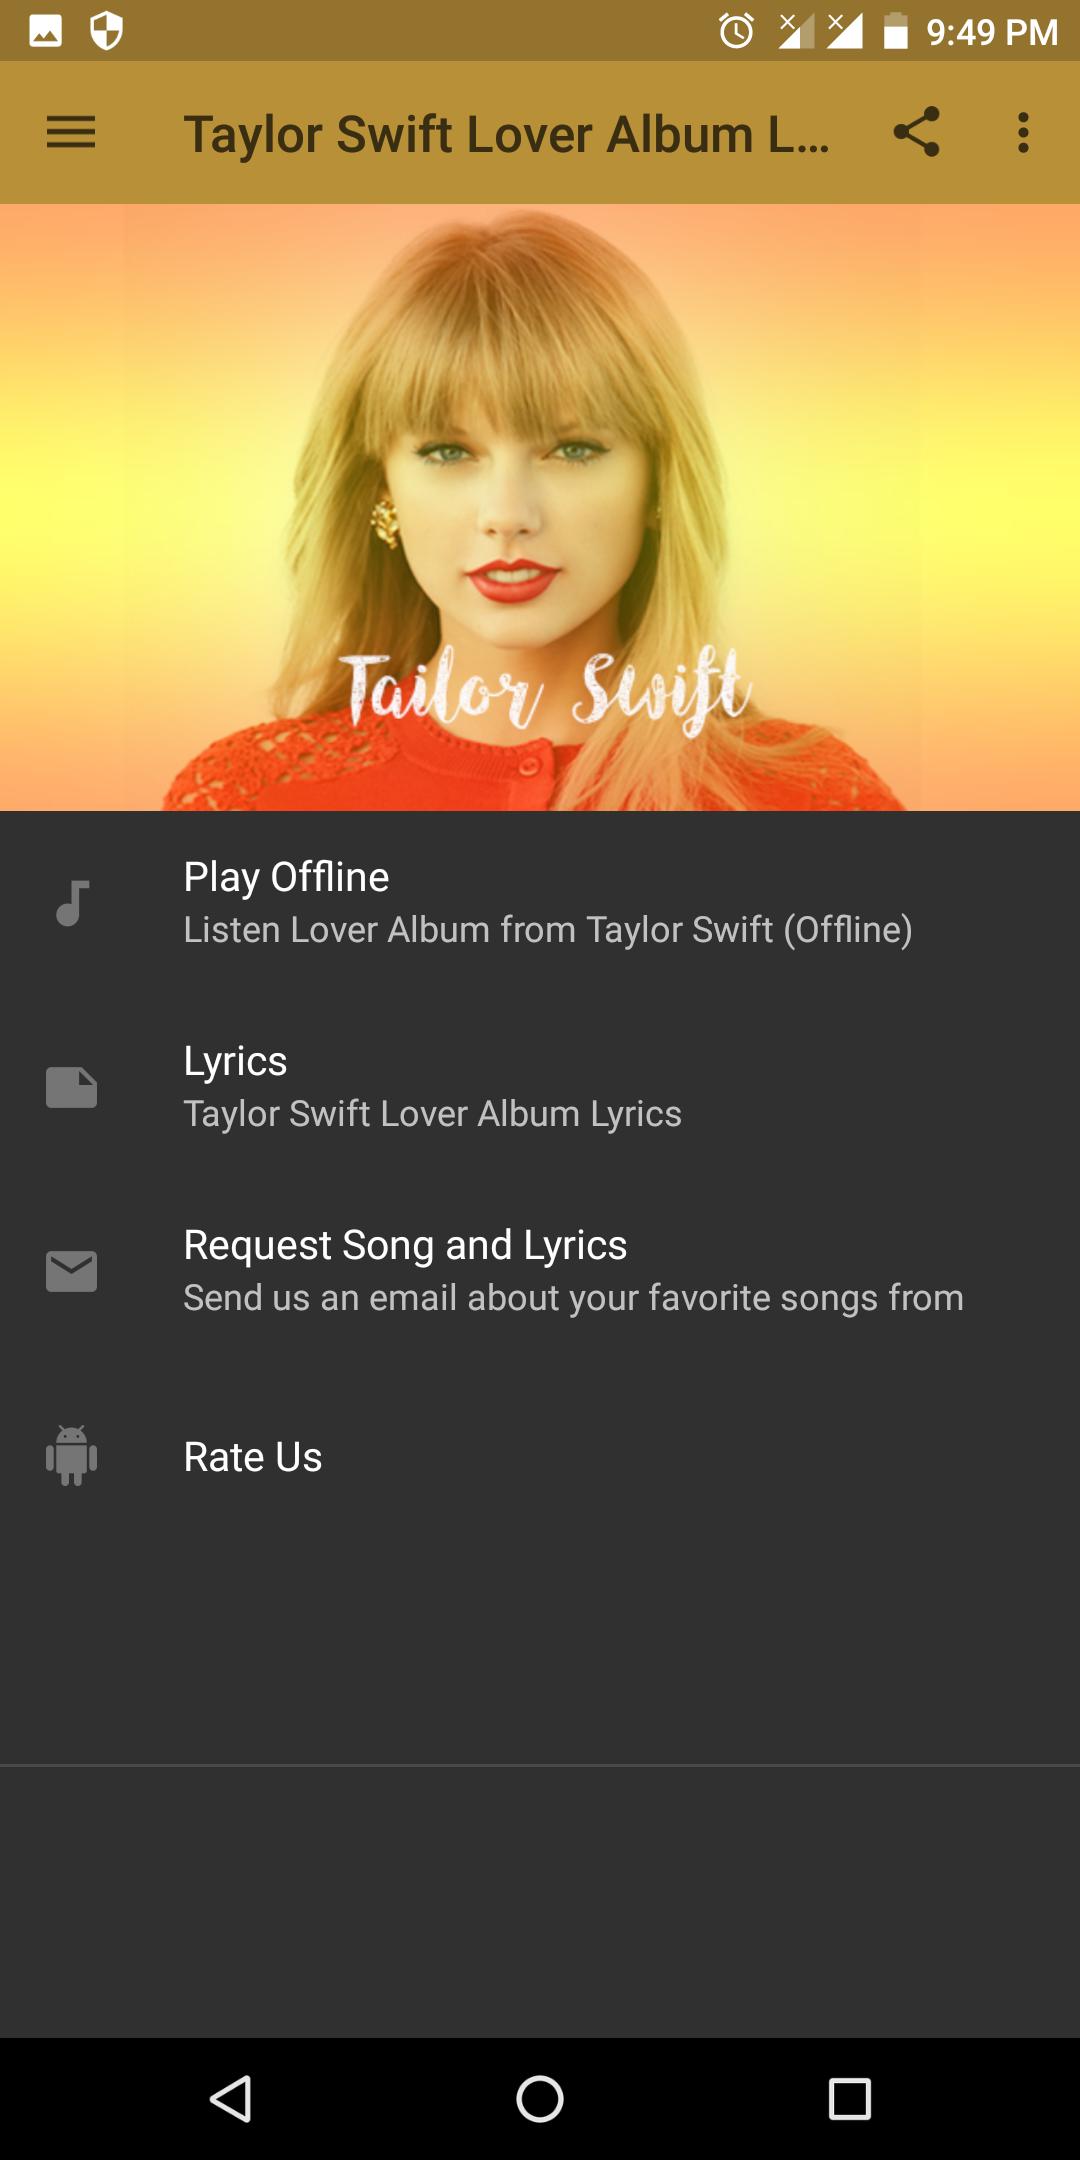 Taylor Swift Lover Album Lyrics For Android Apk Download